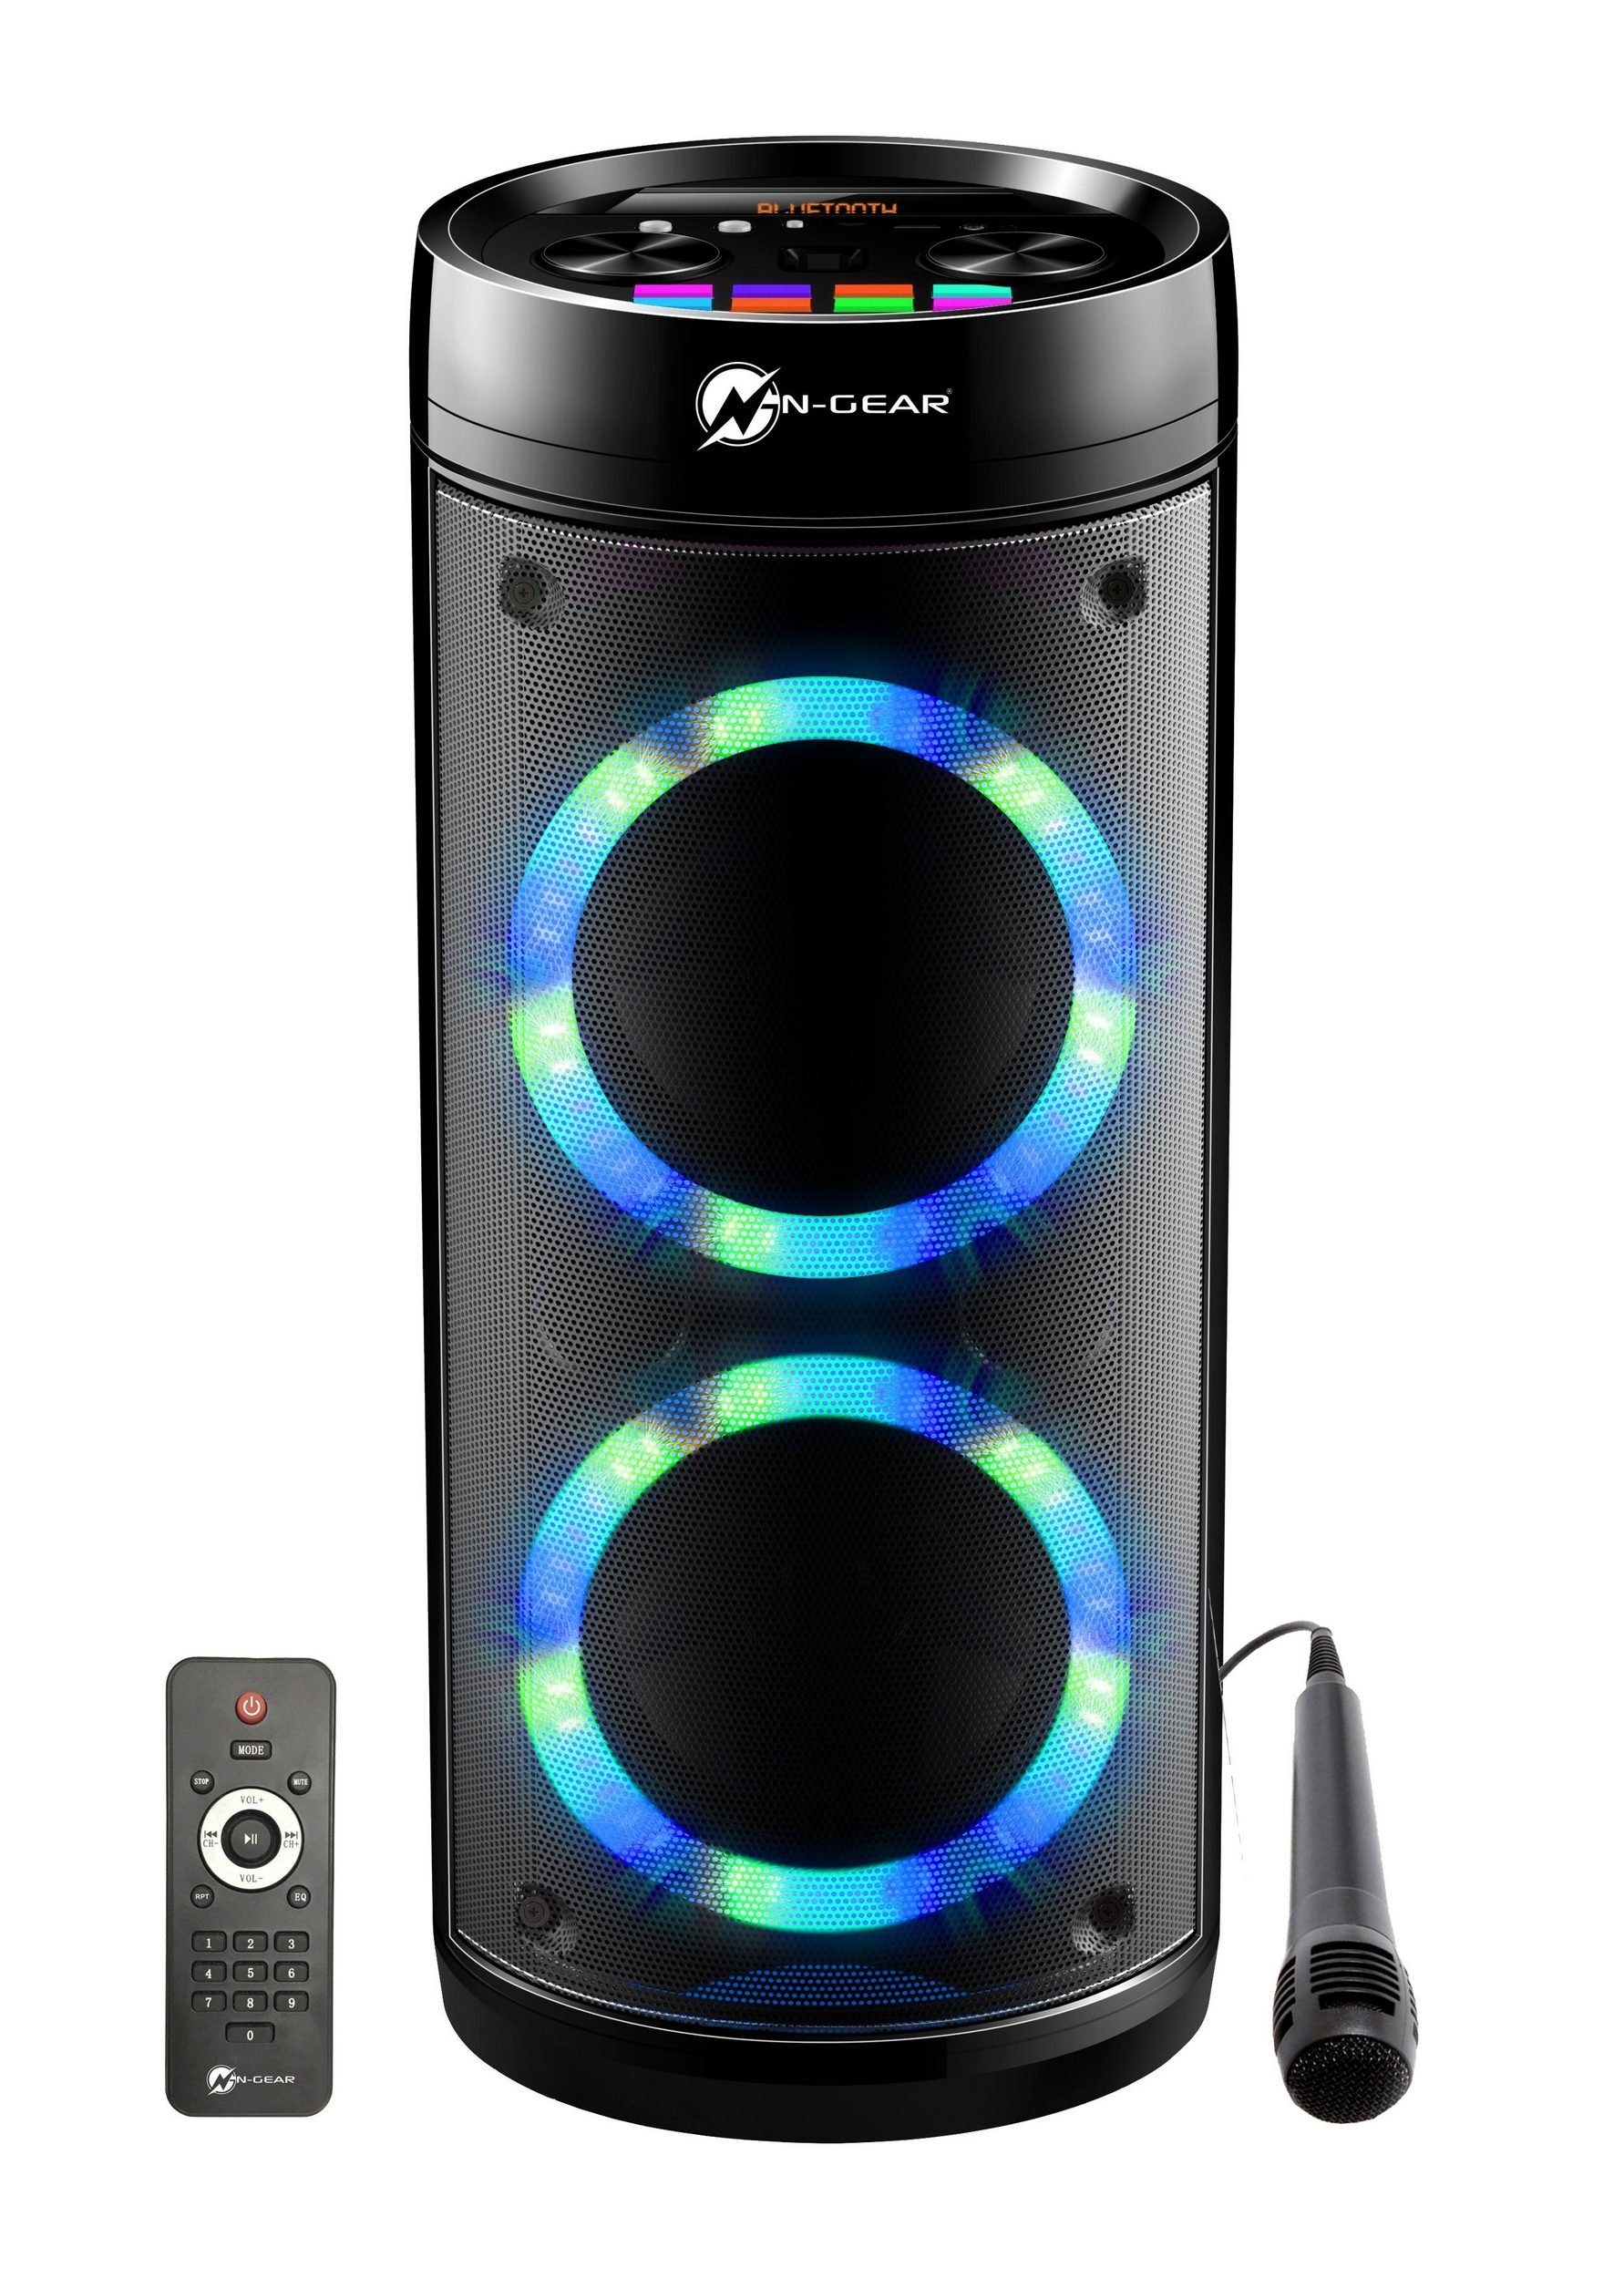 Karaoke Go N-GEAR 600W Power LPG26R Bluetooth-Lautsprecher Leistung Let's Bank, Party Disco, LED